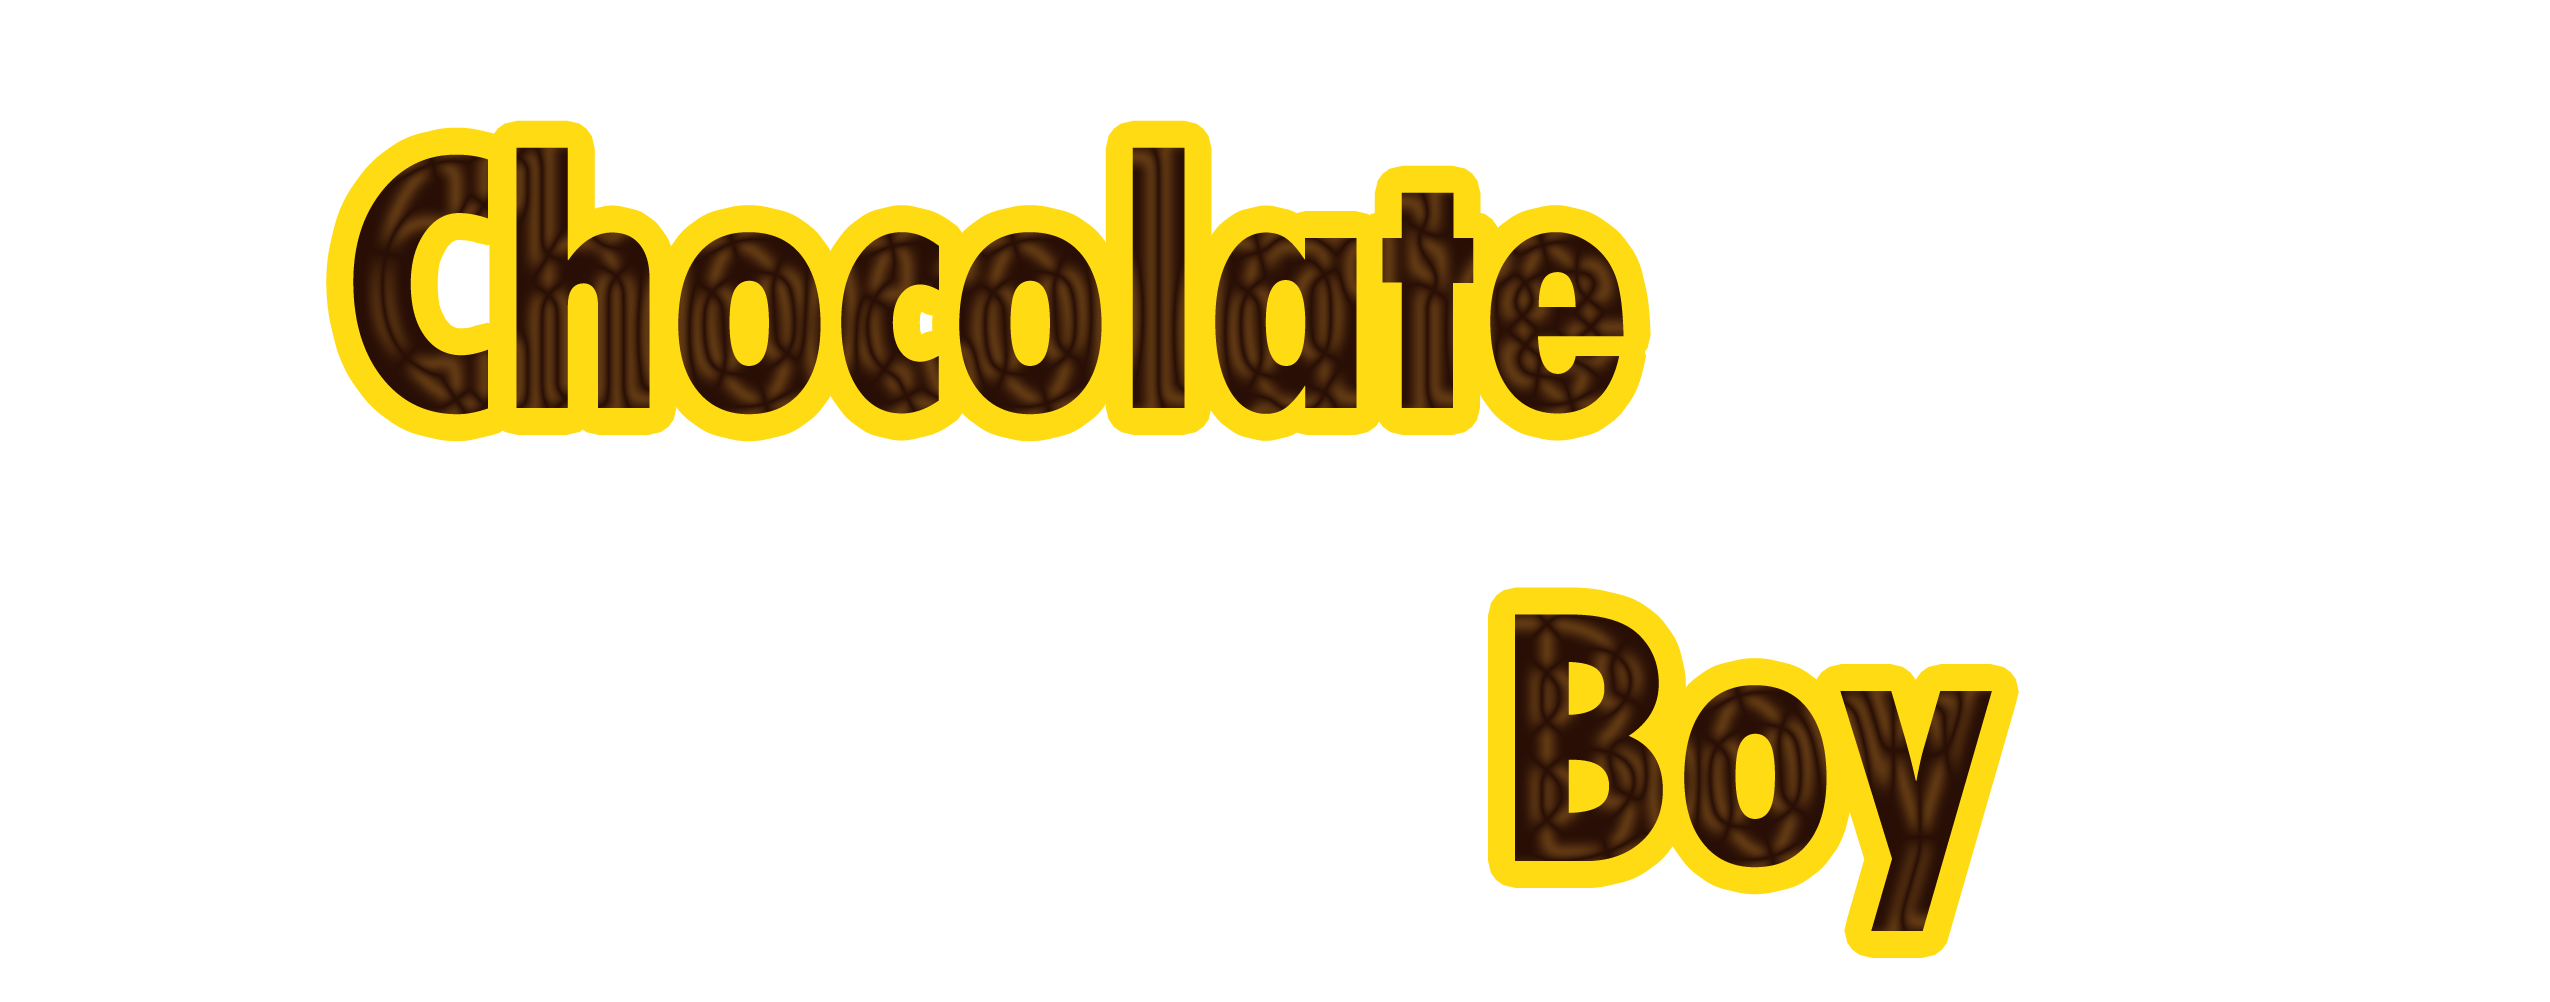 Chocolate Boy #6